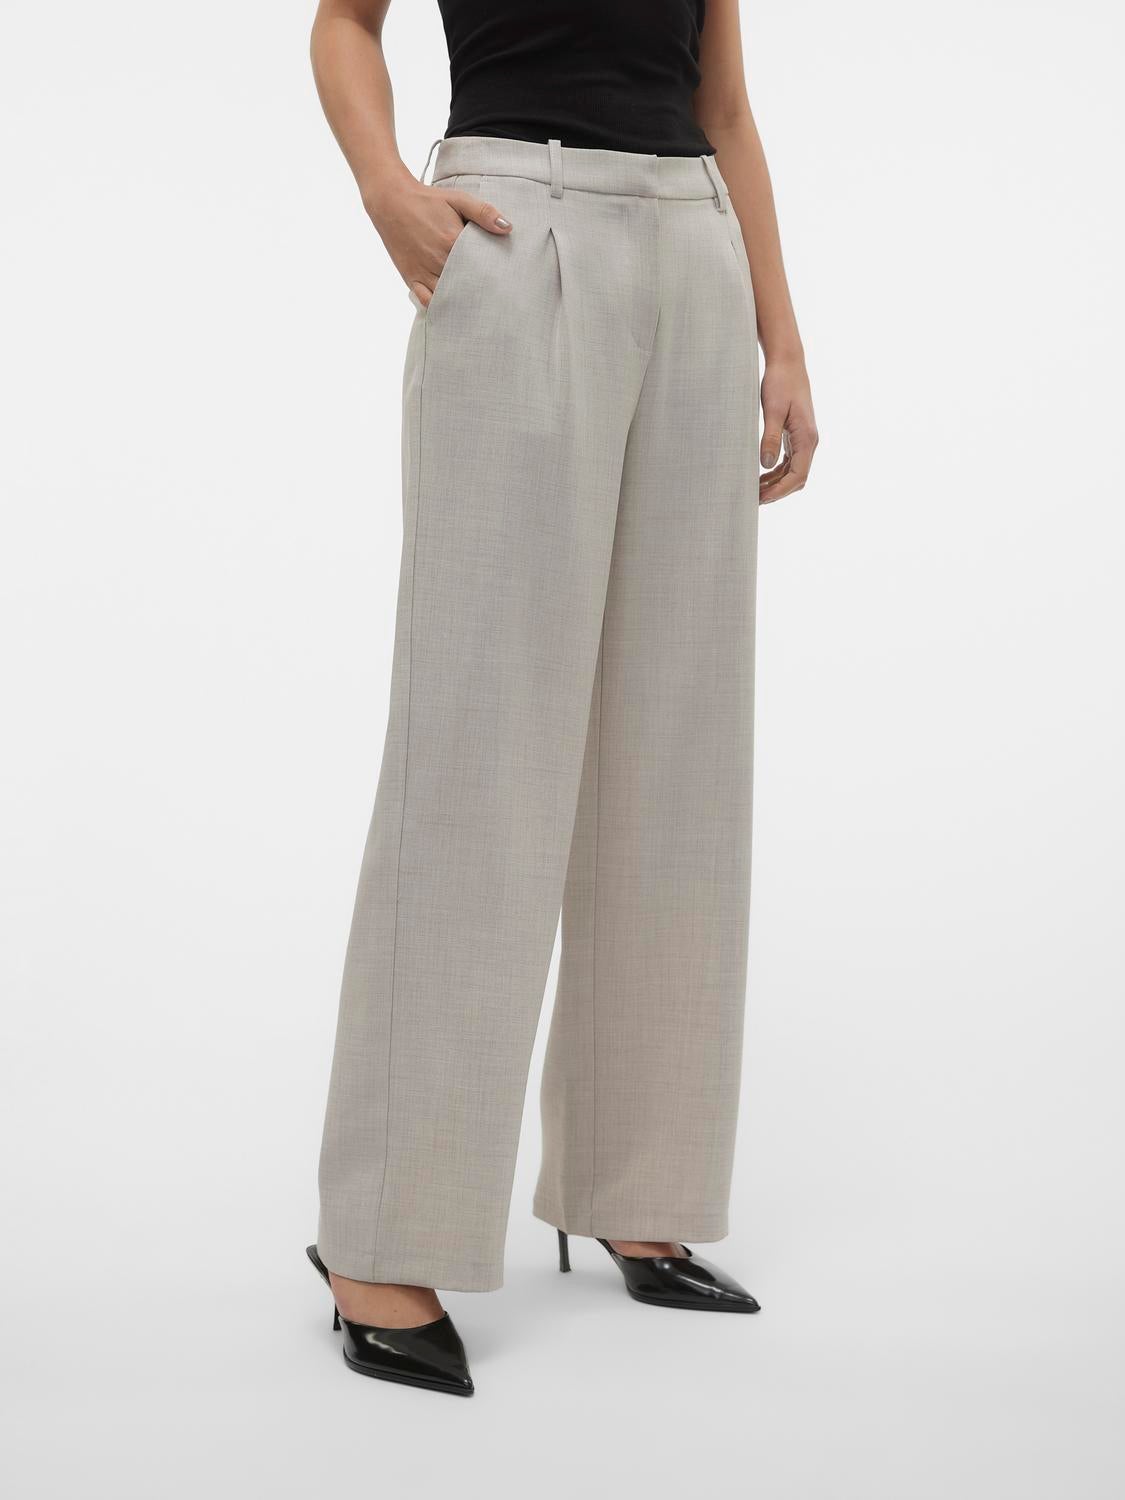 Performance Dress Pants (Grey - Tailored Slacks) | Twillory®